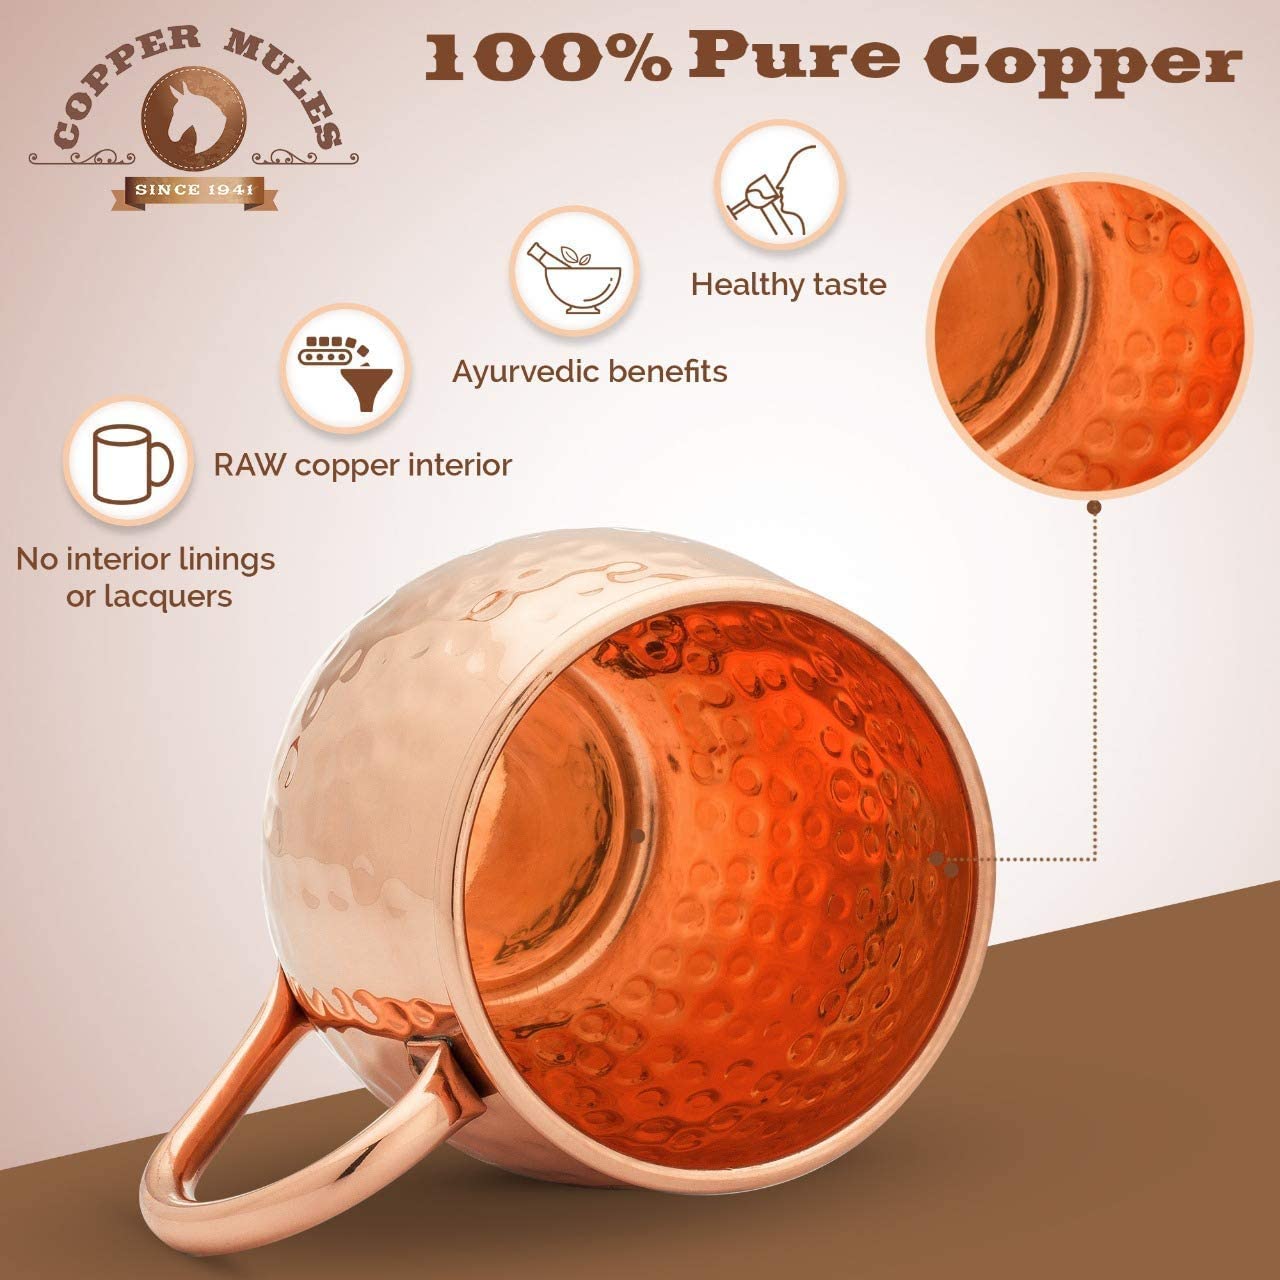 Hammered Pure Copper American Mule Mug- set of 2